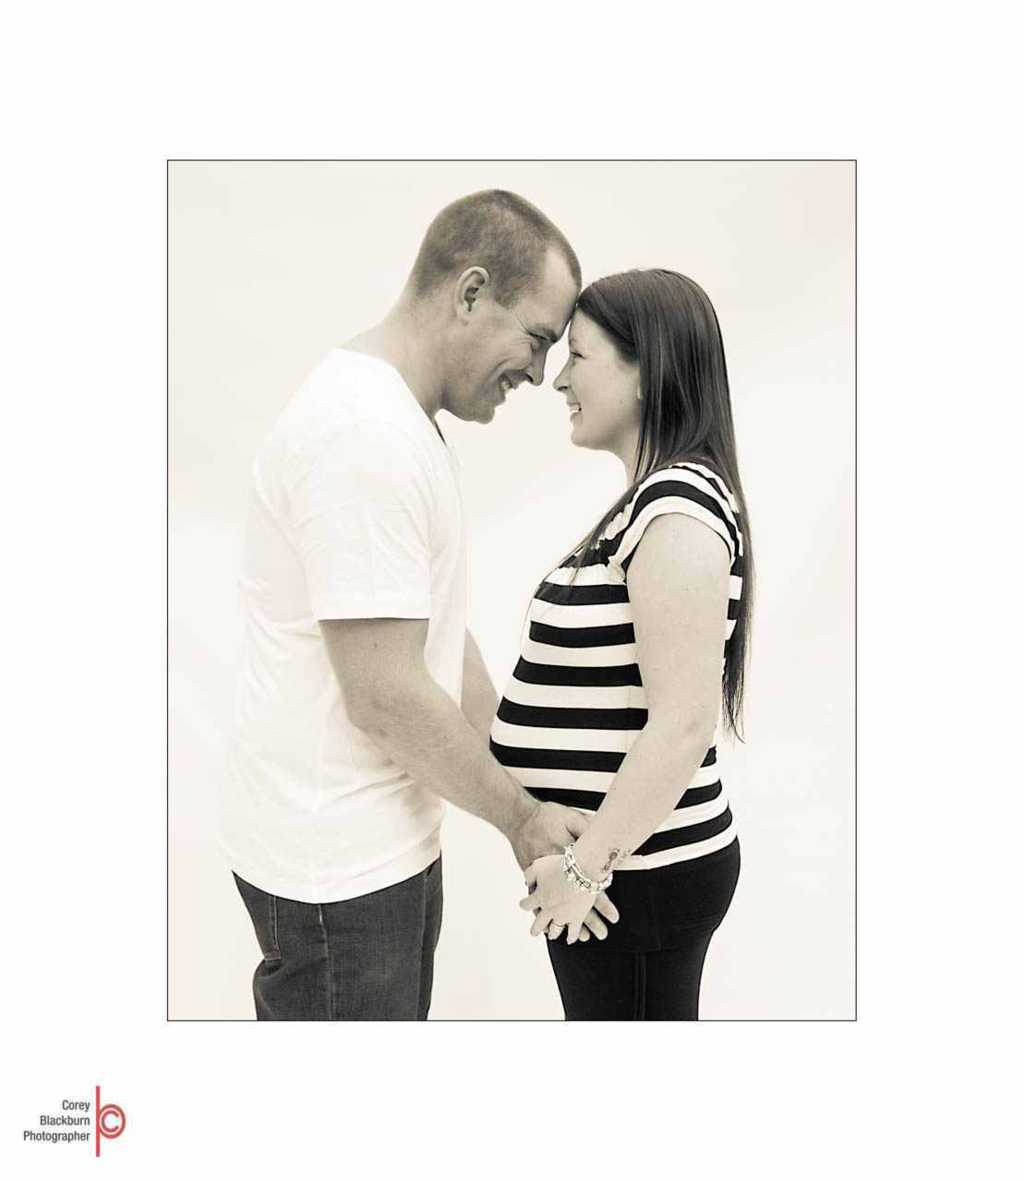 Pregnancy 13 - Corey Blackburn Photographer - Weddings | Pregnancy | Newborn | Portrait | Fine Art | Commercial | Journalism